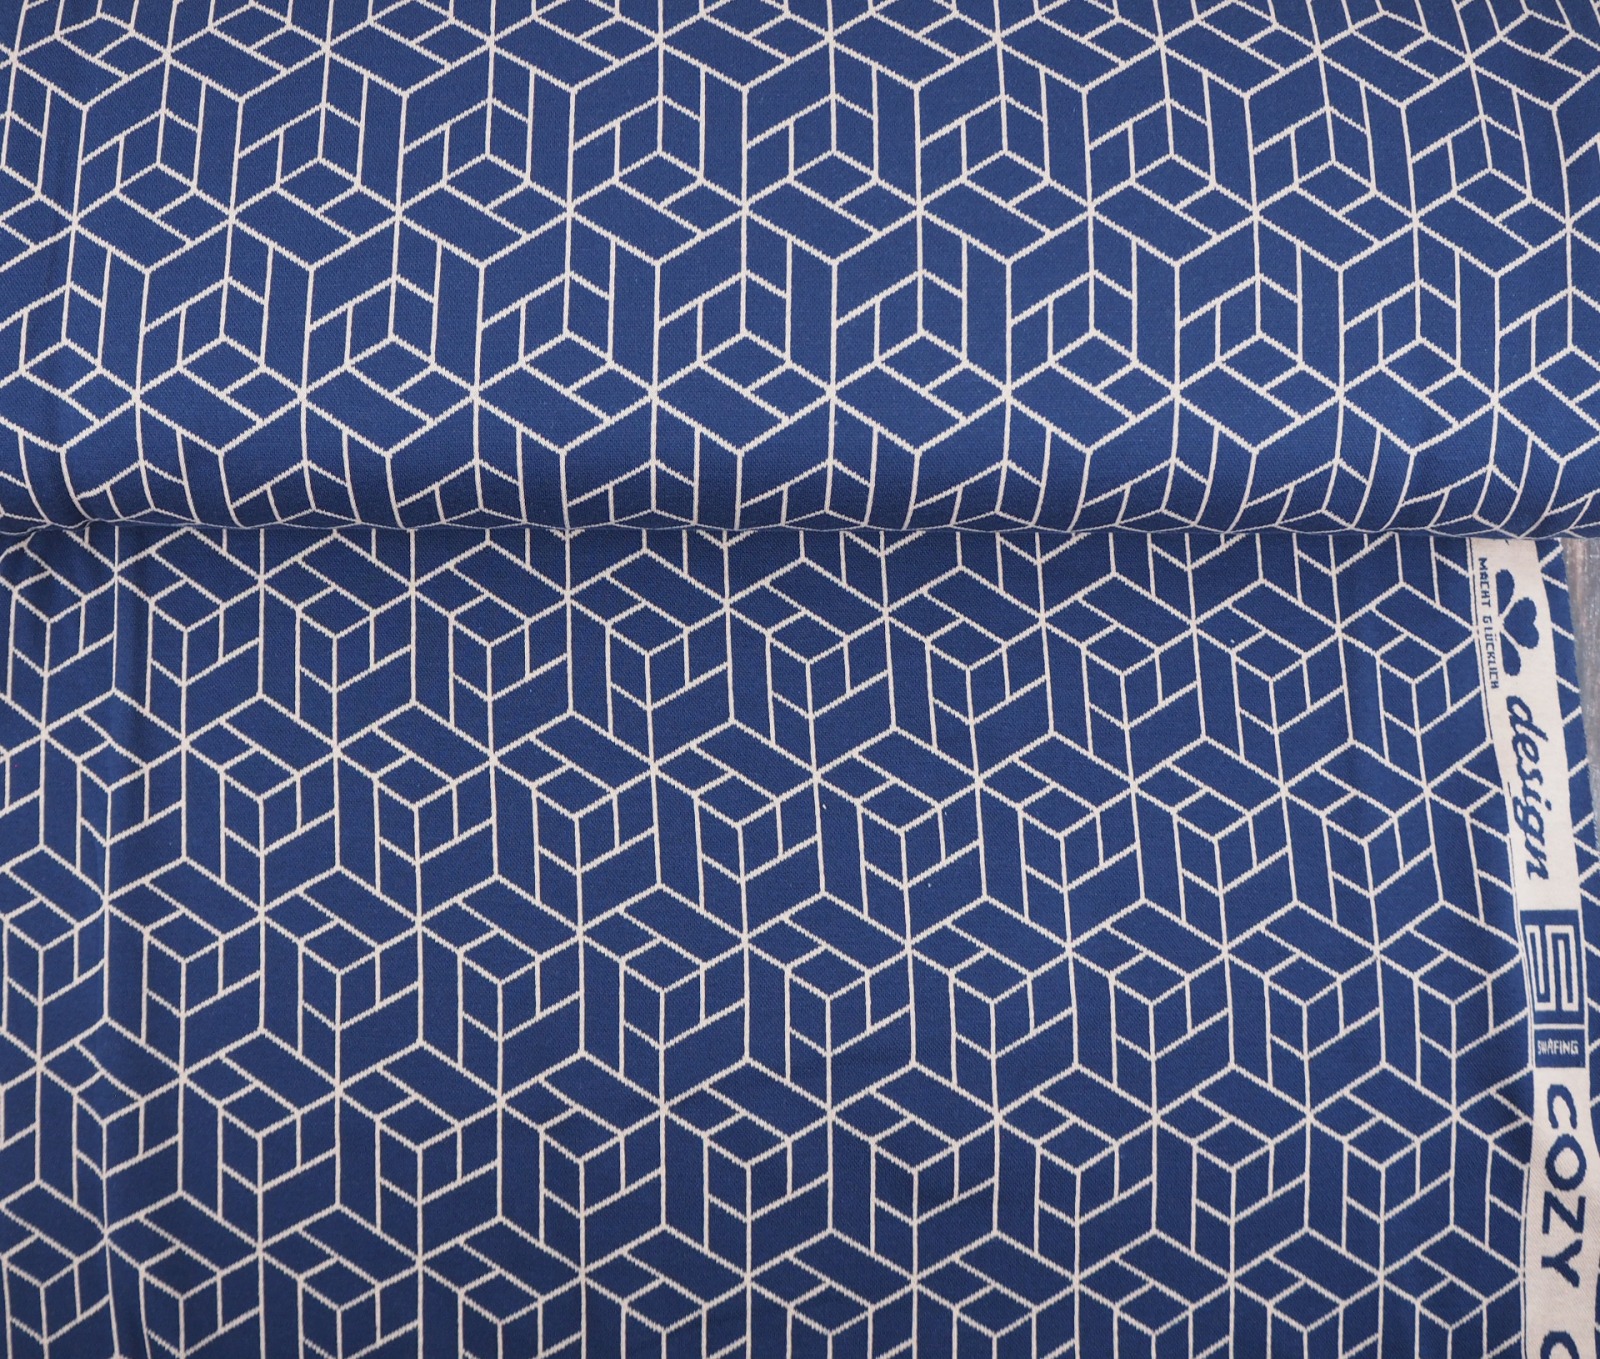 Jaquardstrick 1596/m Cozy Collection by lycklig design Swafing blau geometrisches Muster Damenstoffe